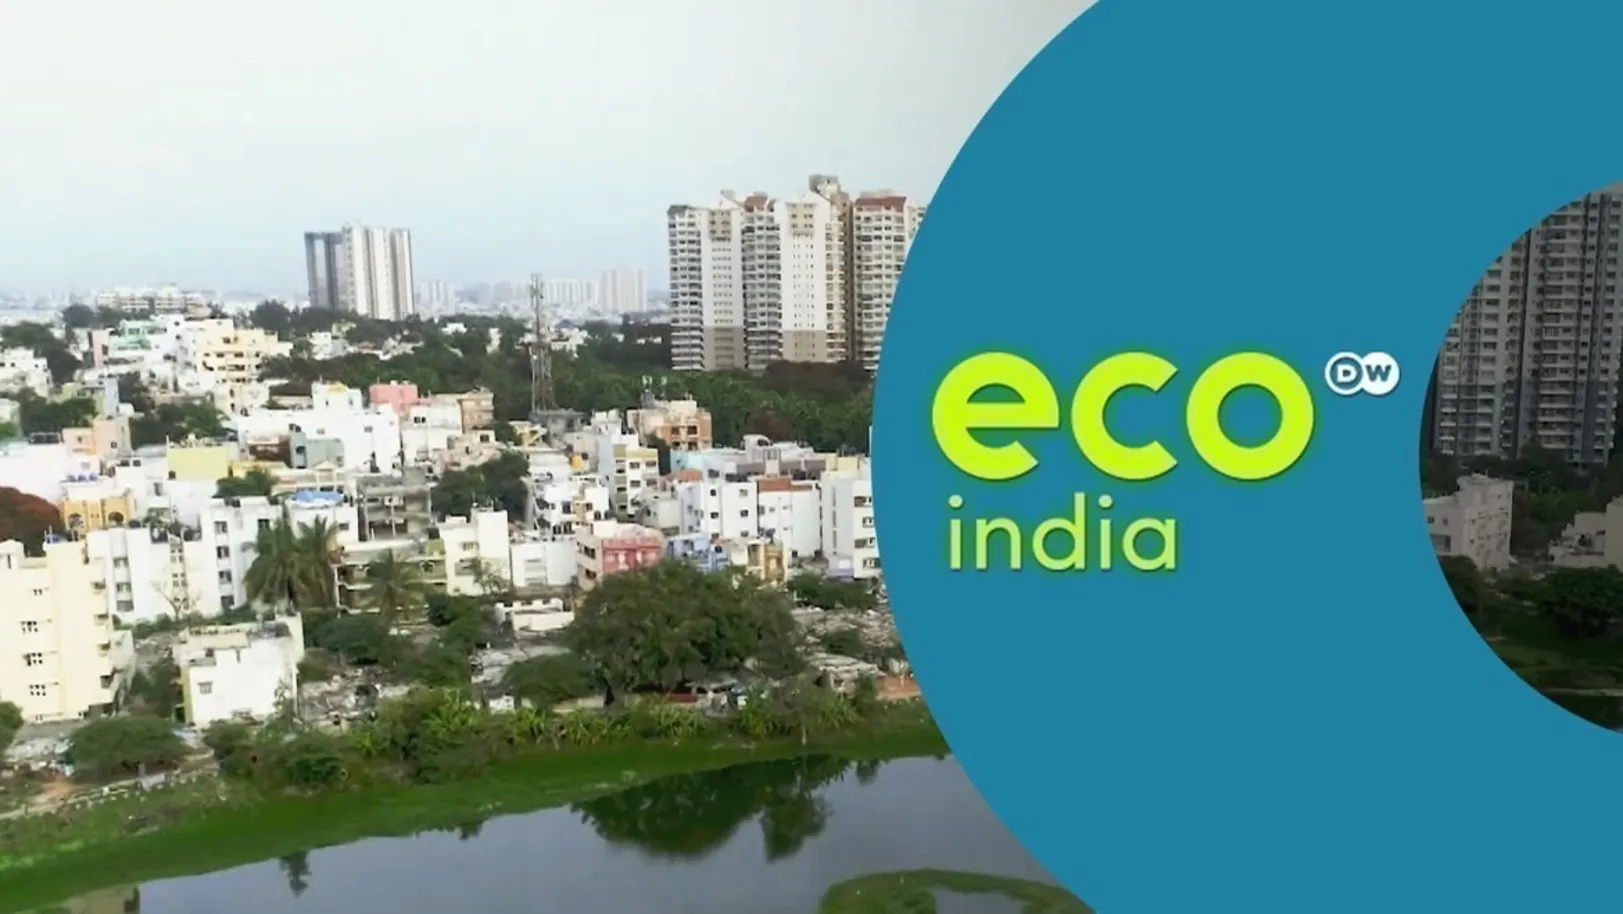 Eco India - English TV Show